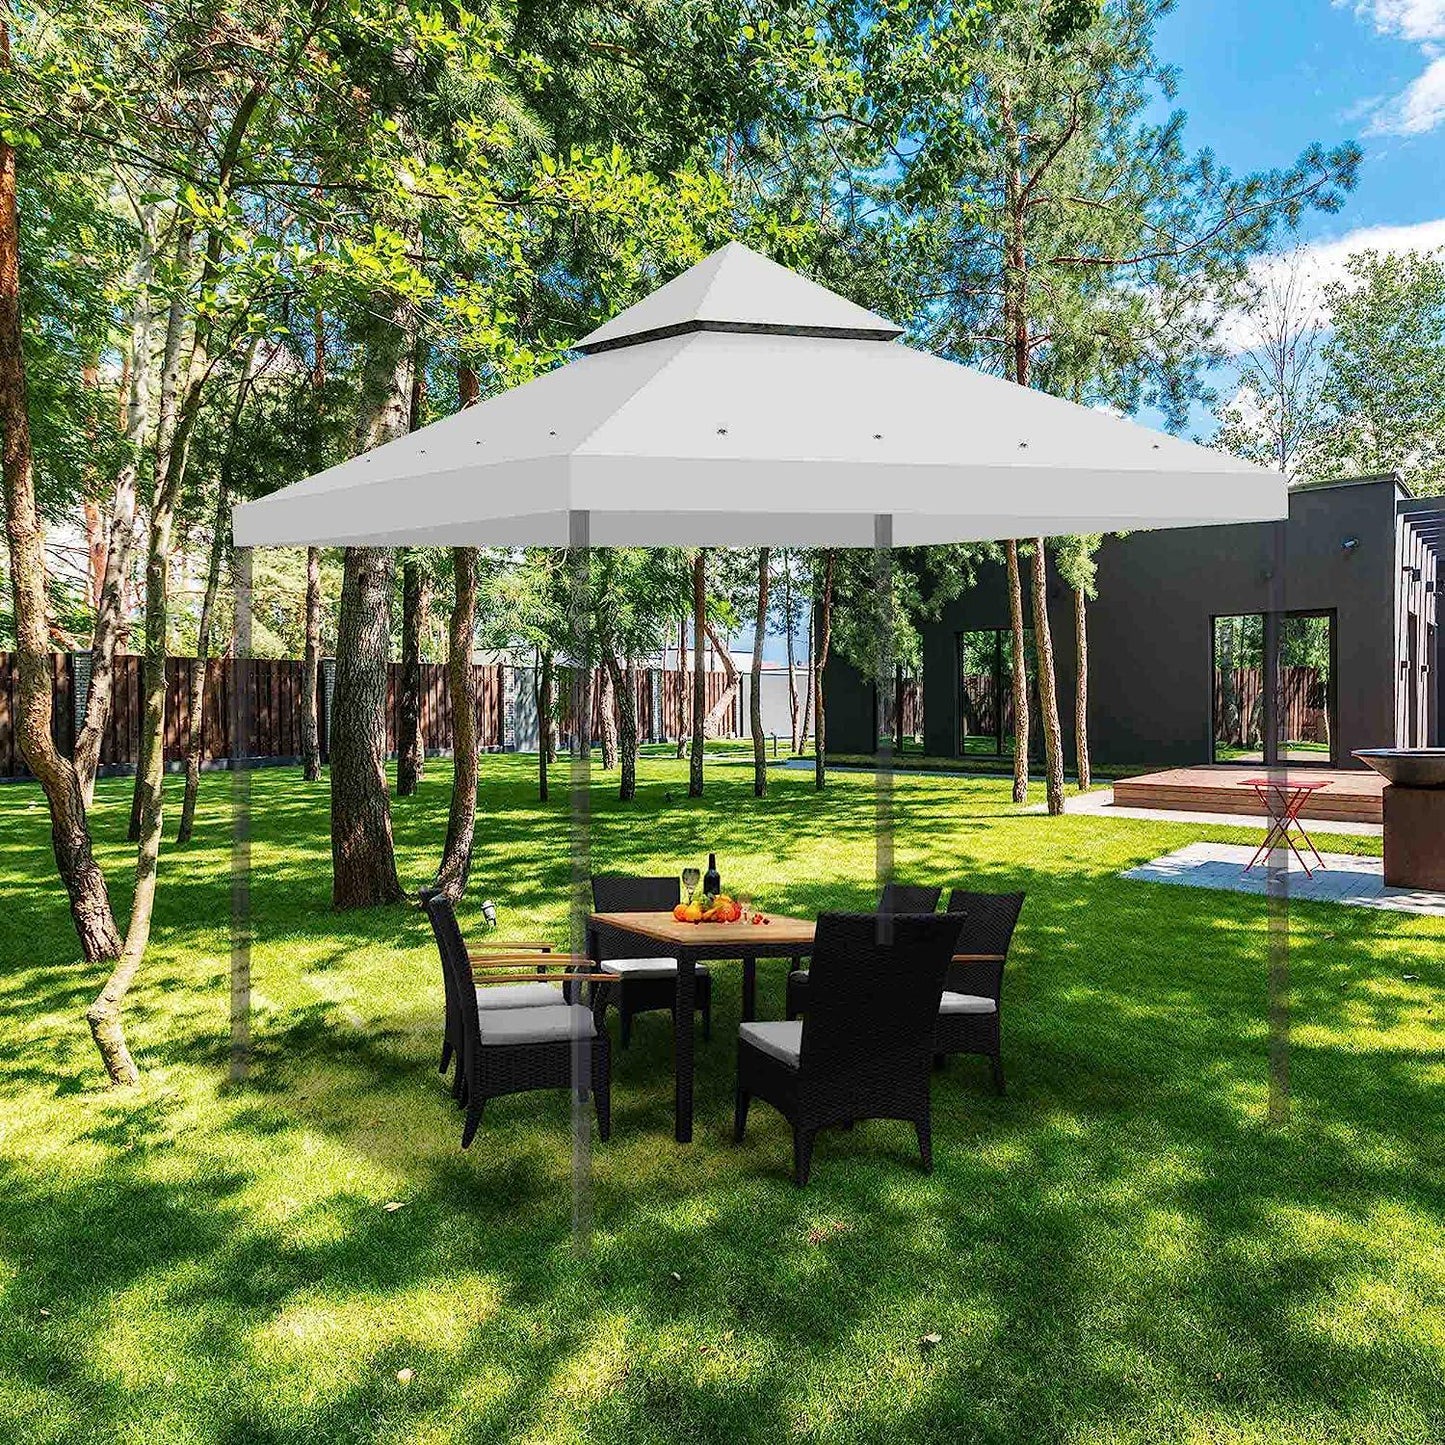 10'x10' Gazebo Top Replacement for 2 Tier Outdoor Canopy Cover Patio Garden Yard Grey